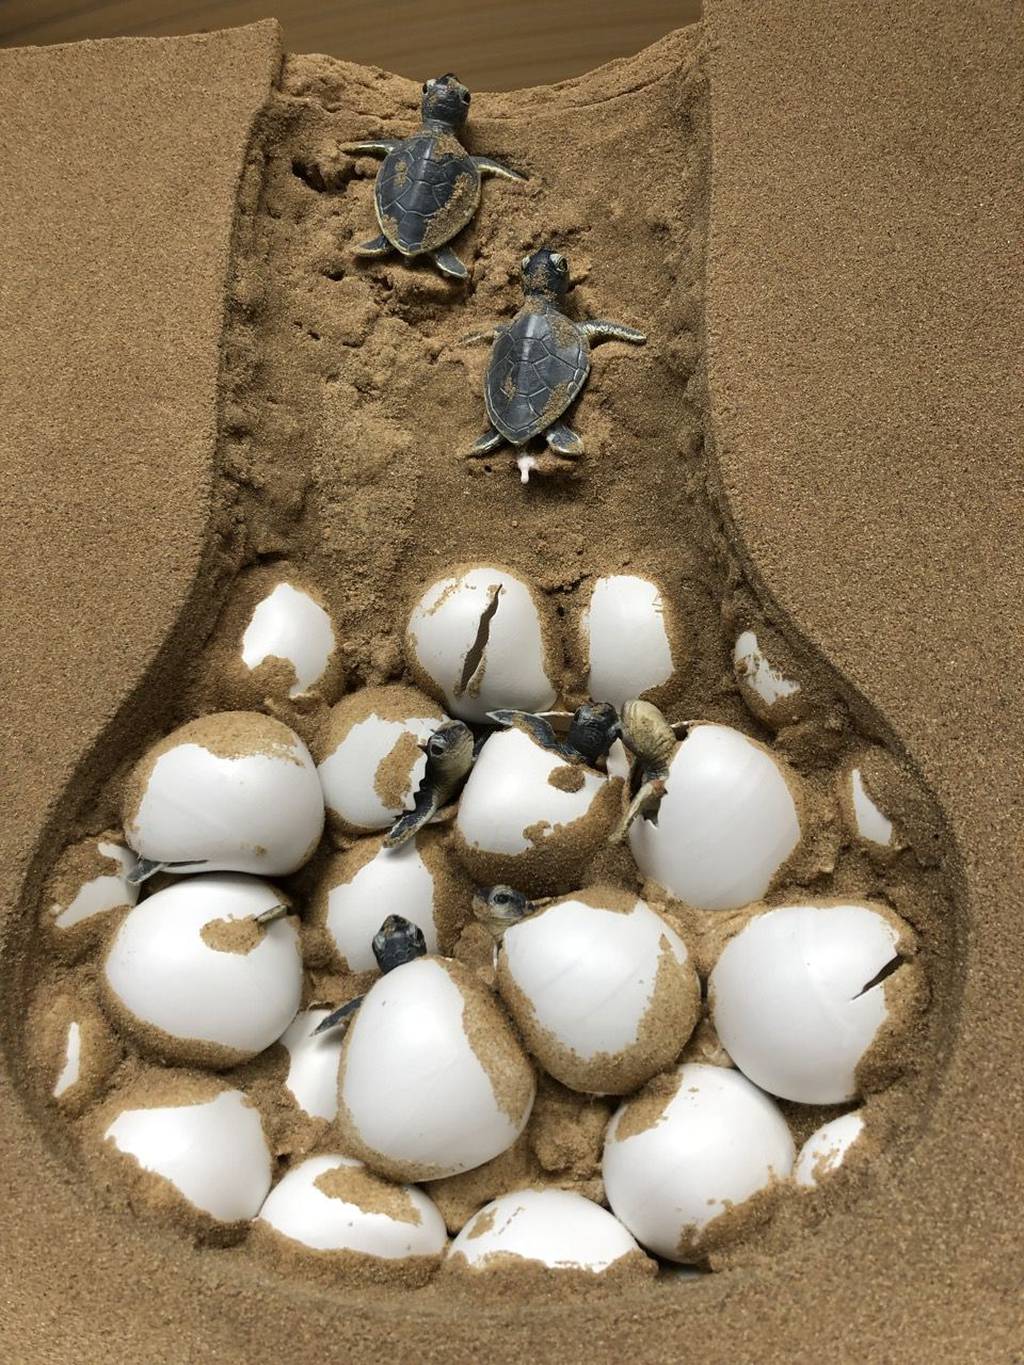 3D printed Sea Turtles Nest - London Zoo 4